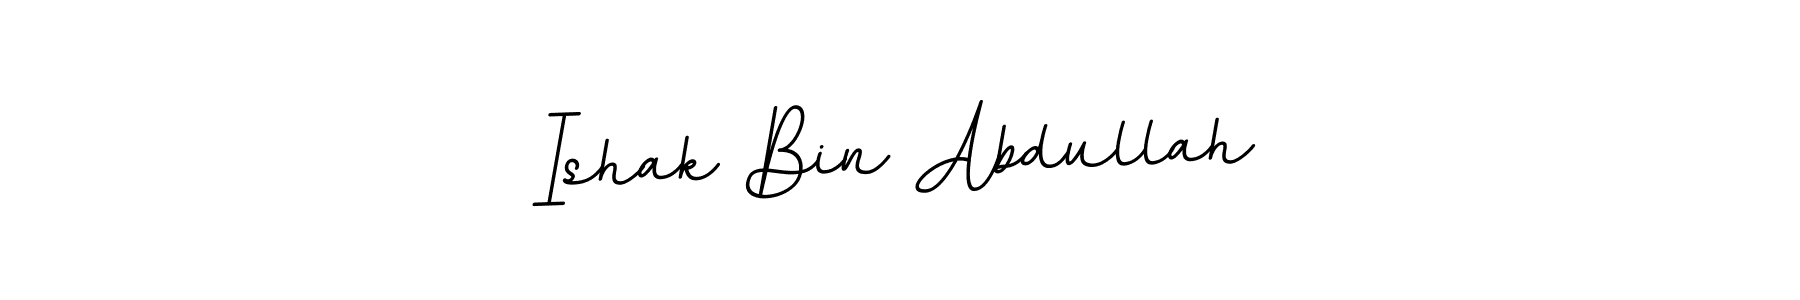 How to Draw Ishak Bin Abdullah signature style? BallpointsItalic-DORy9 is a latest design signature styles for name Ishak Bin Abdullah. Ishak Bin Abdullah signature style 11 images and pictures png